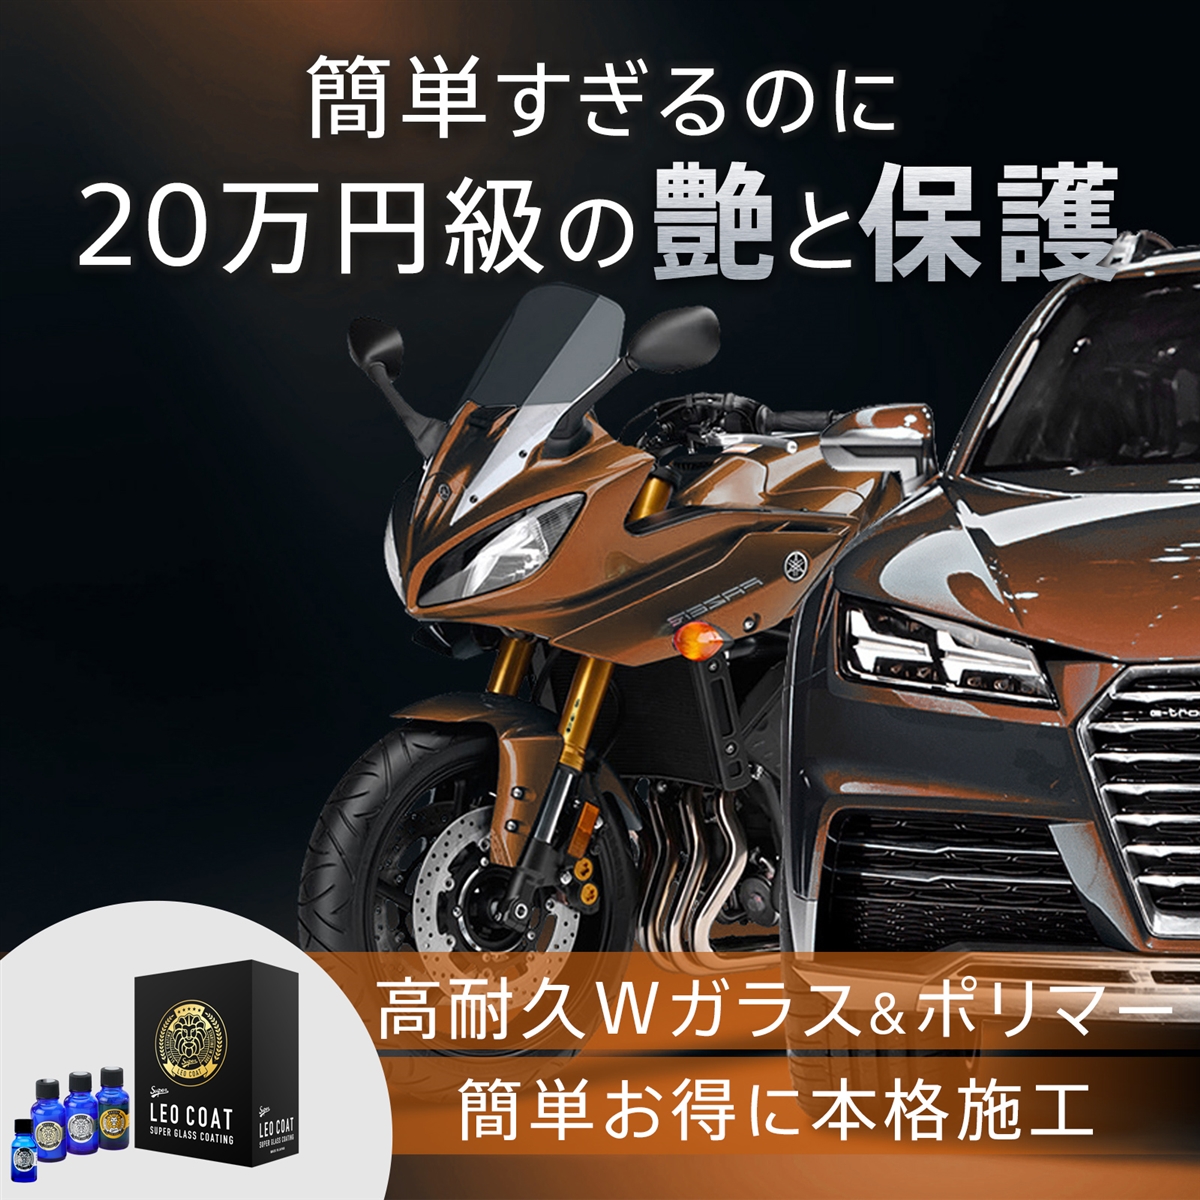 LEO COAT高速ガラスコーティング 車・バイク用  レオコート Speed Pro ガラスコーティング剤